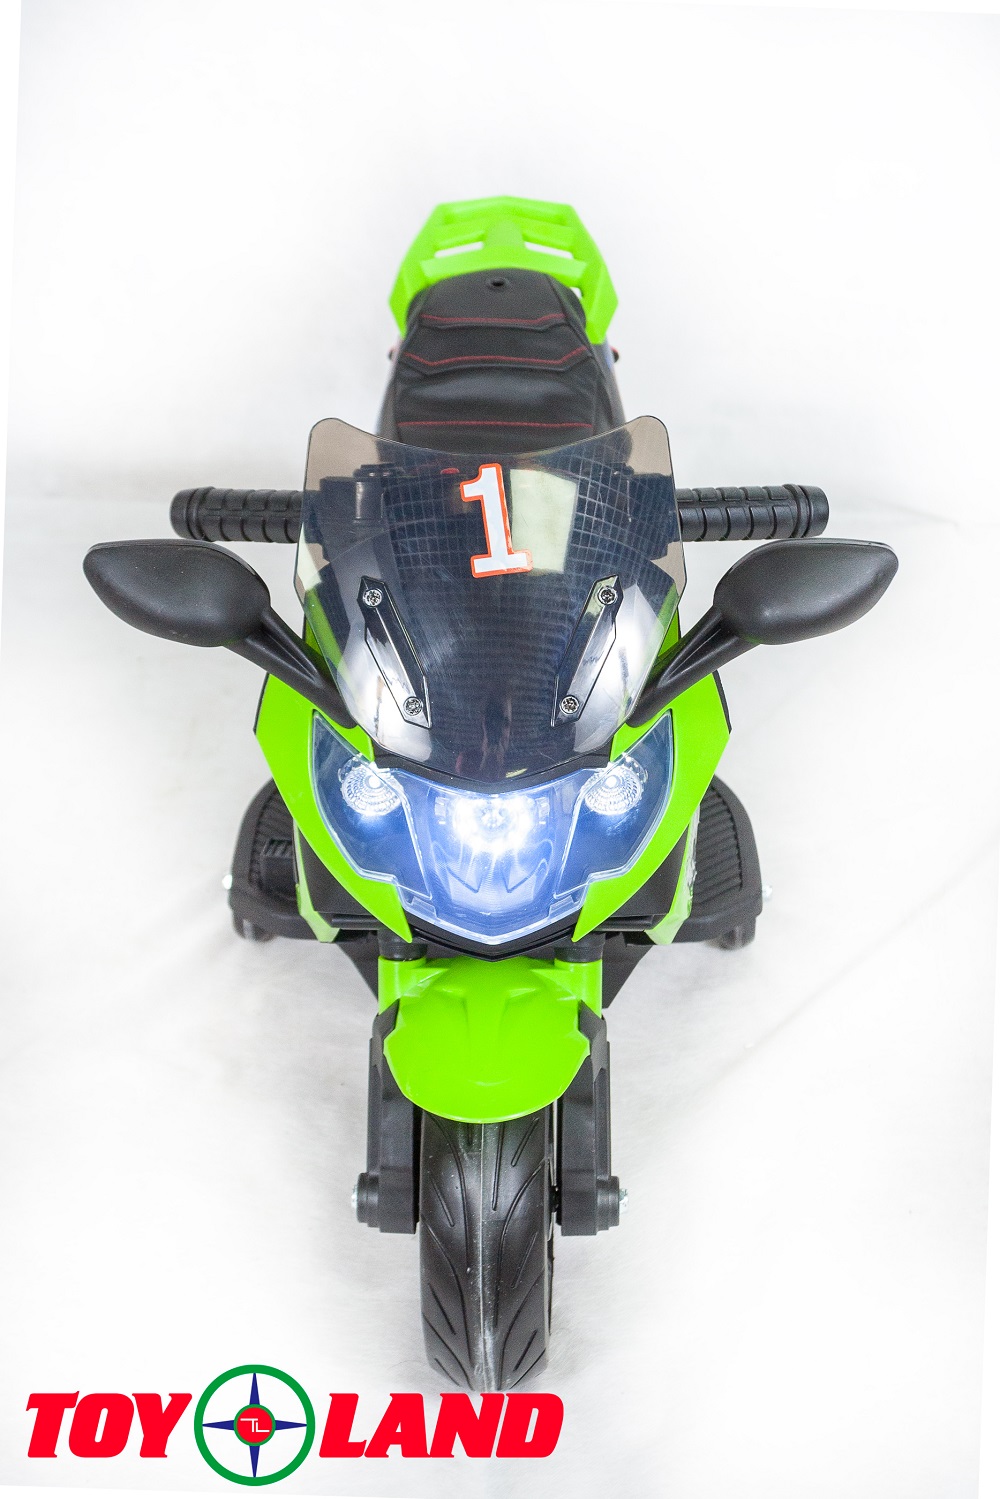 Электромотоцикл - Minimoto LQ 158, зеленый, свет и звук  